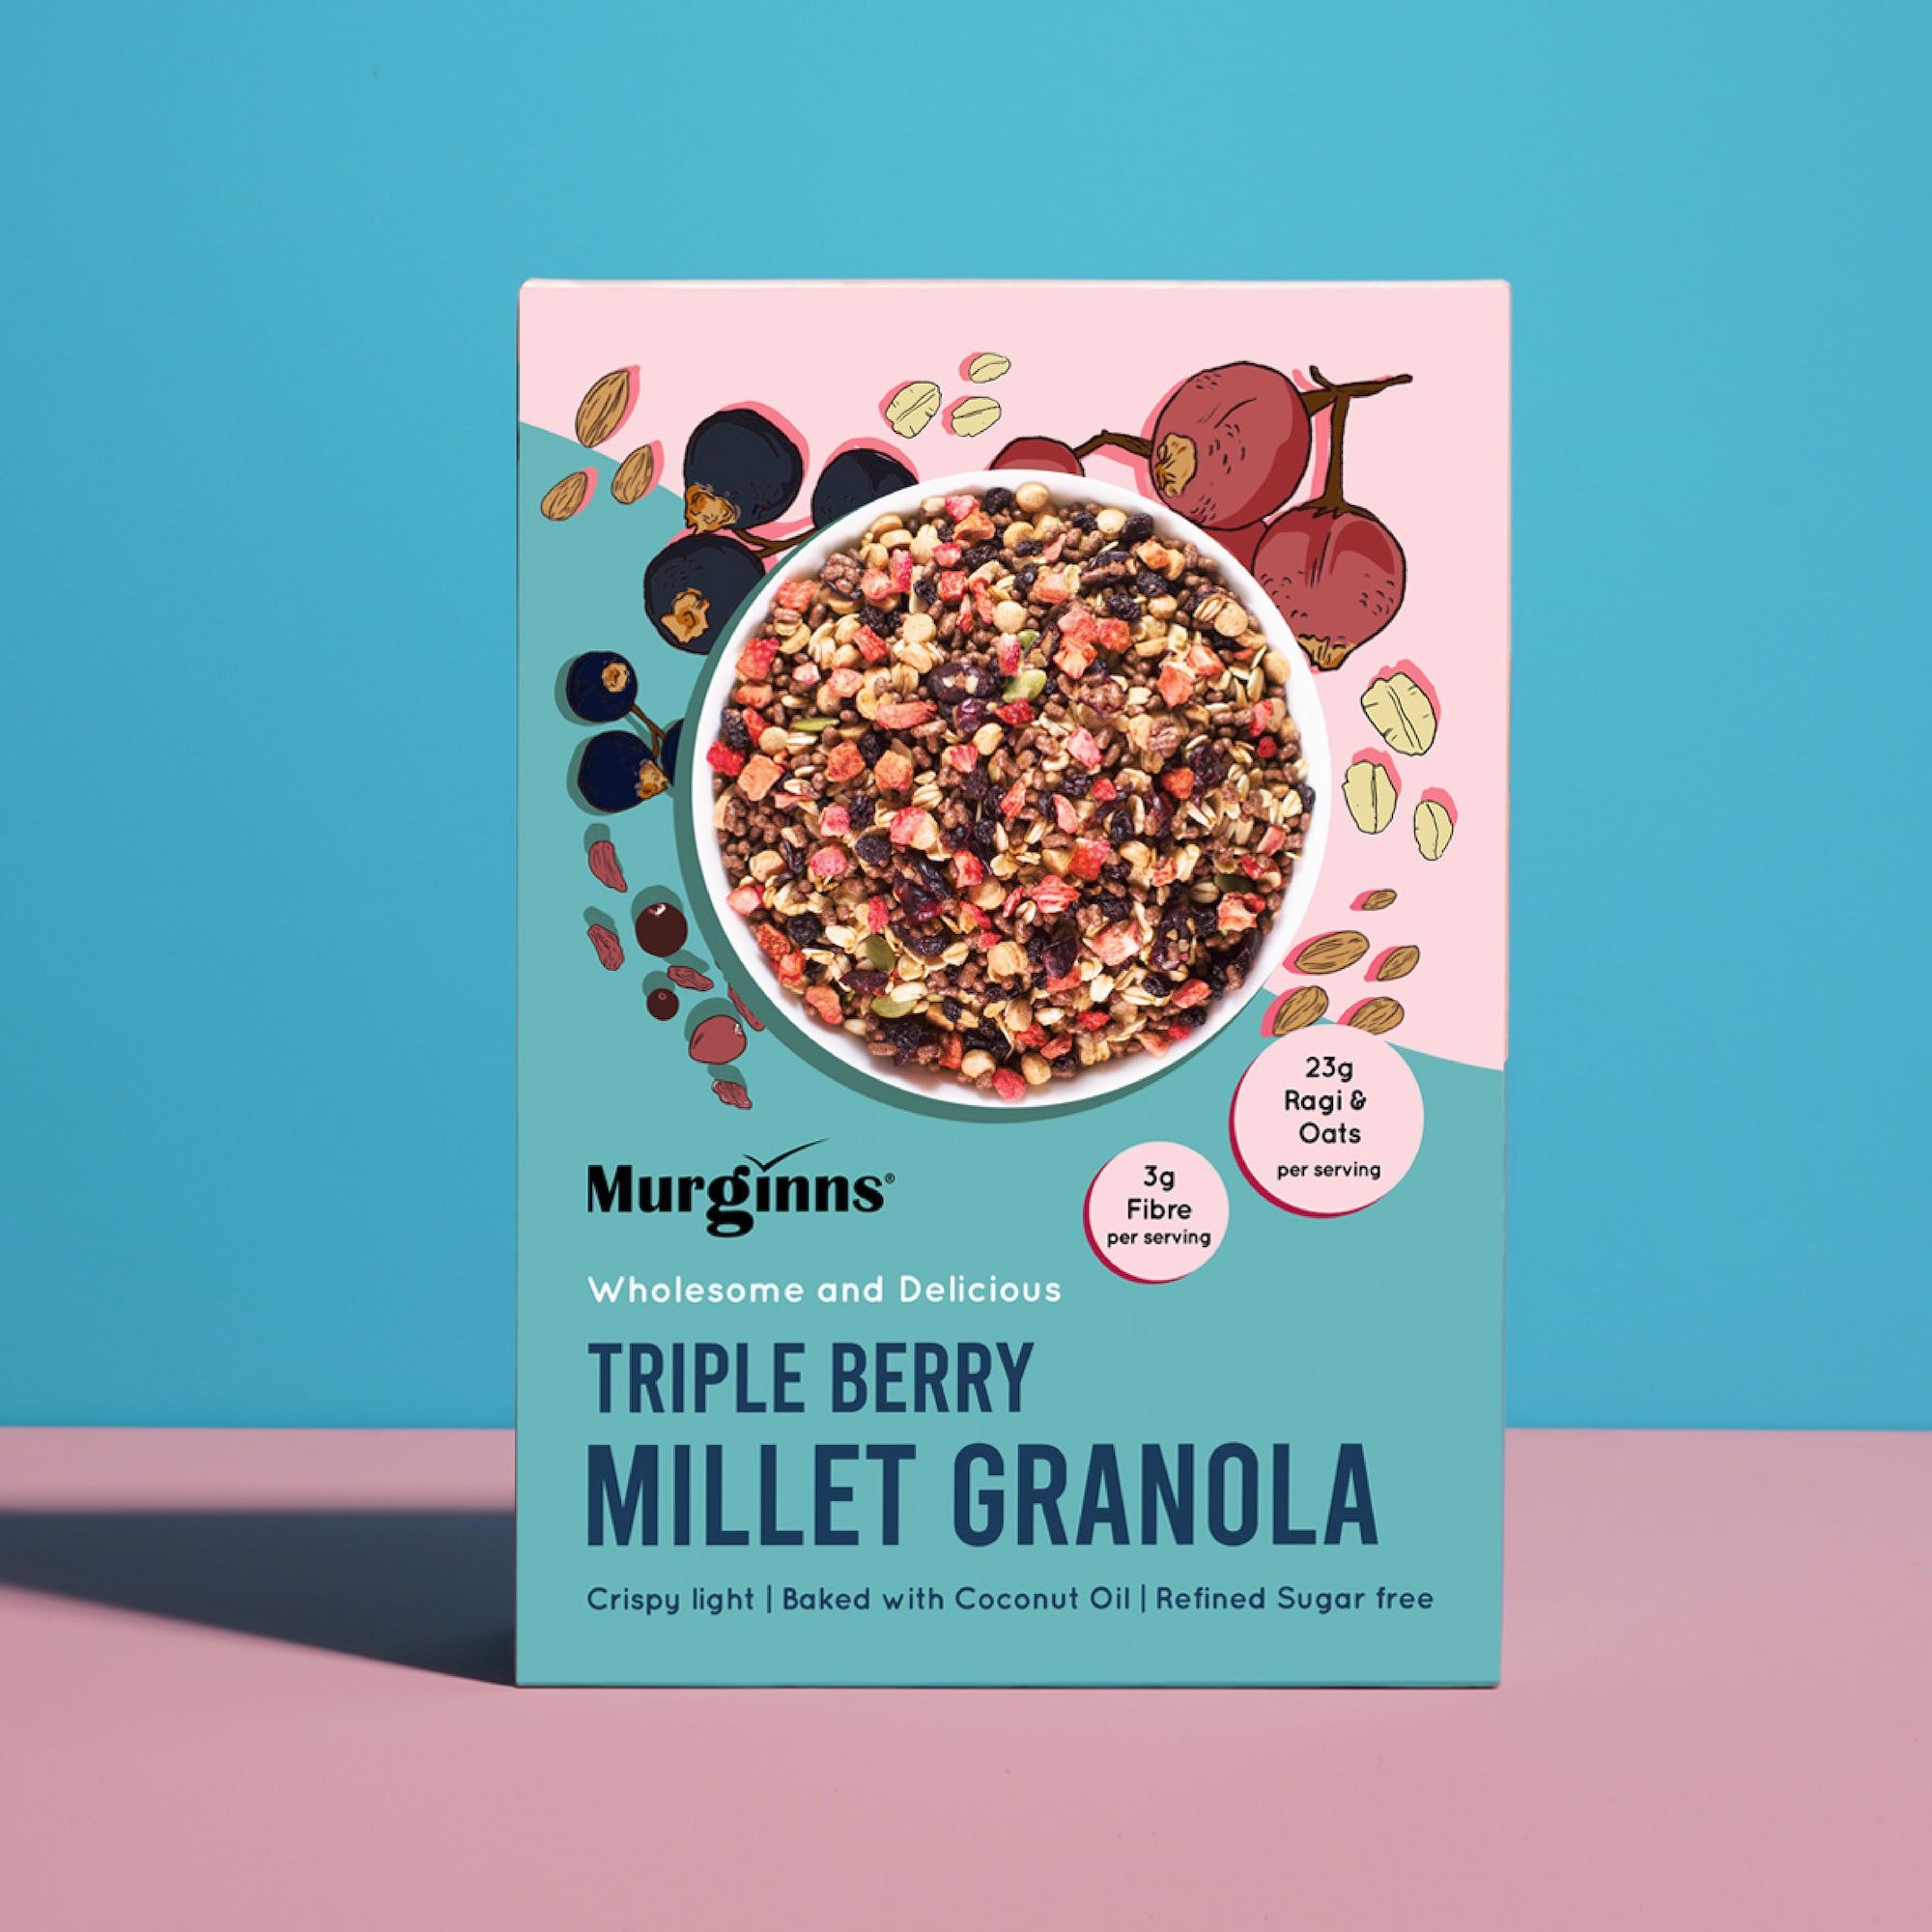 Murginns Triple Berry Millet Granola Image